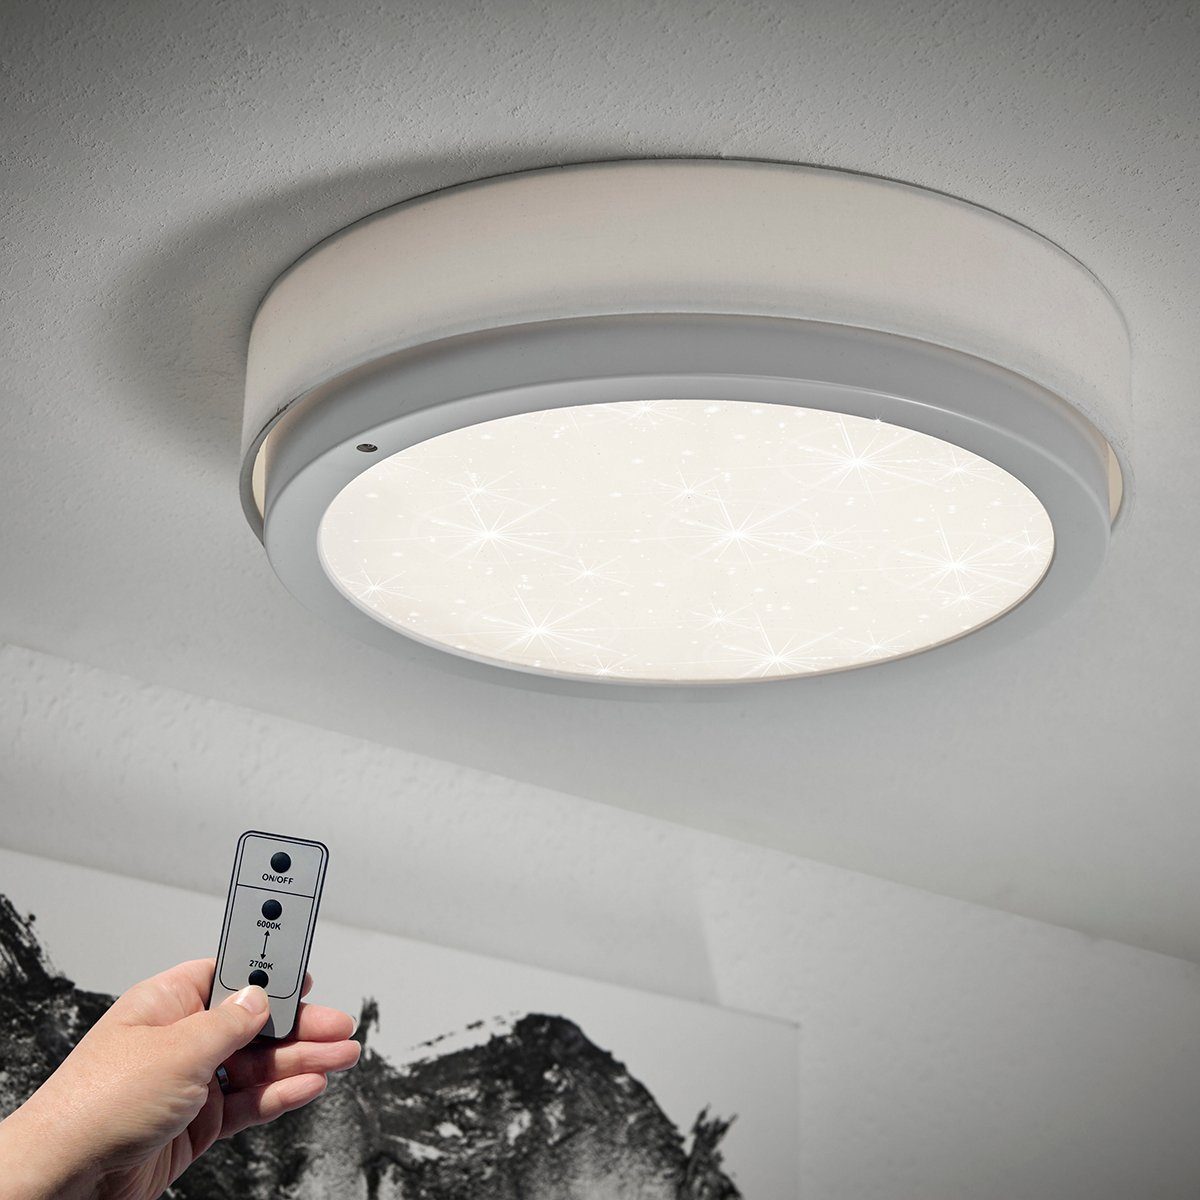 Deckenleuchte cm kaltweiß, 32x8 D112, Leuchte integriert, creme-weiß - Wand Deckenleuchte LED Smart LED MeLiTec LED warmweiß fest Home Wandlampe